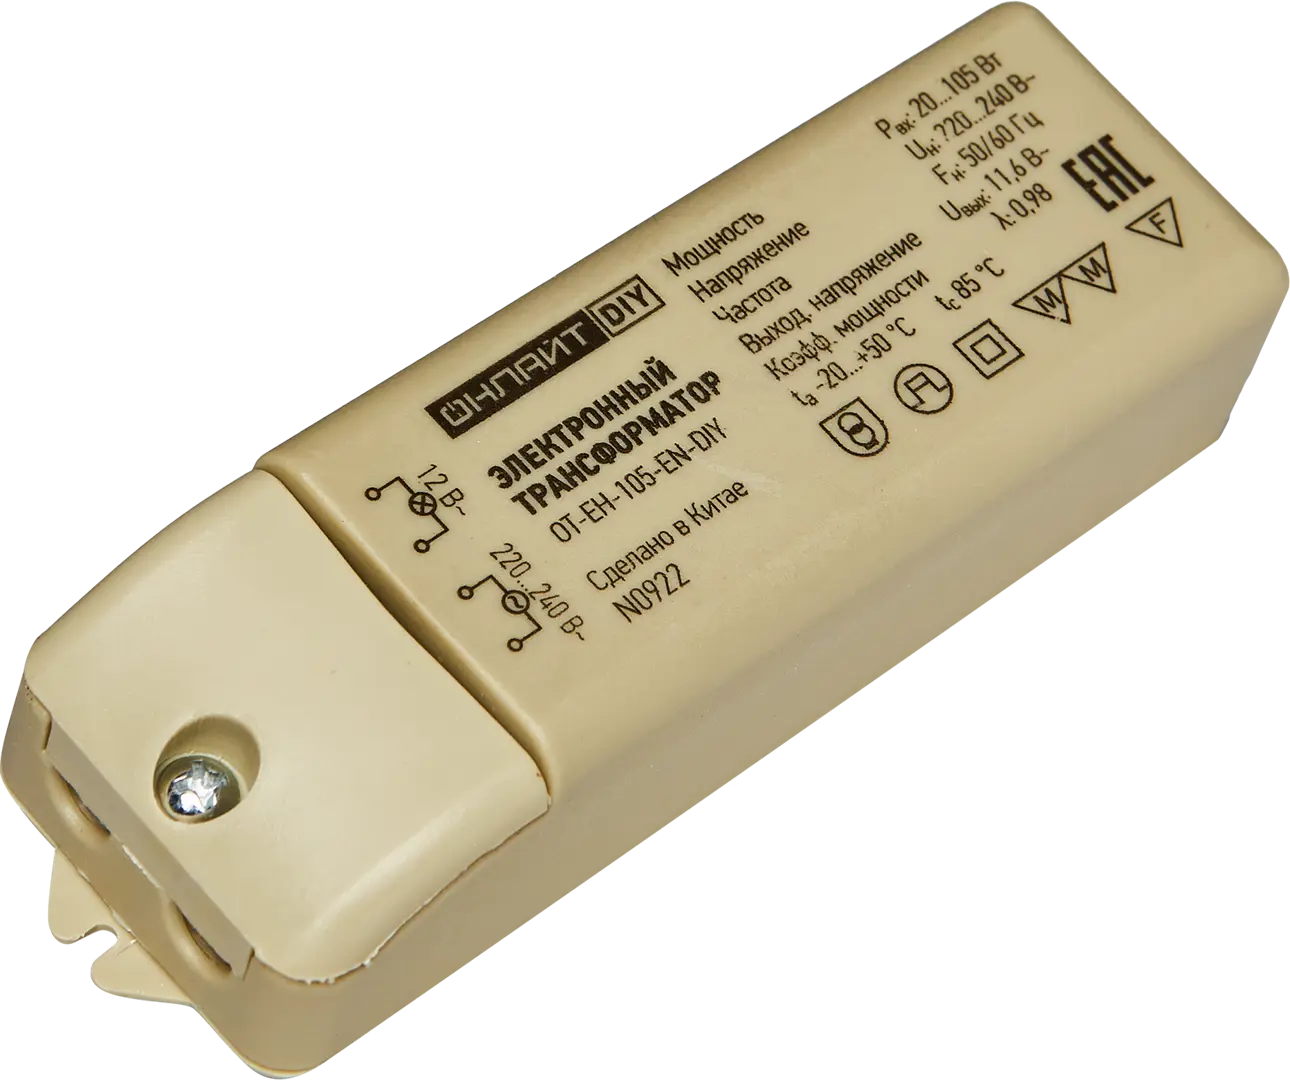 Трансформатор Онлайт OT-EH-105-EN для галогенных ламп 220 В 105 Вт трансформатор онлайт ot eh 105 en для галогенных ламп 220 в 105 вт